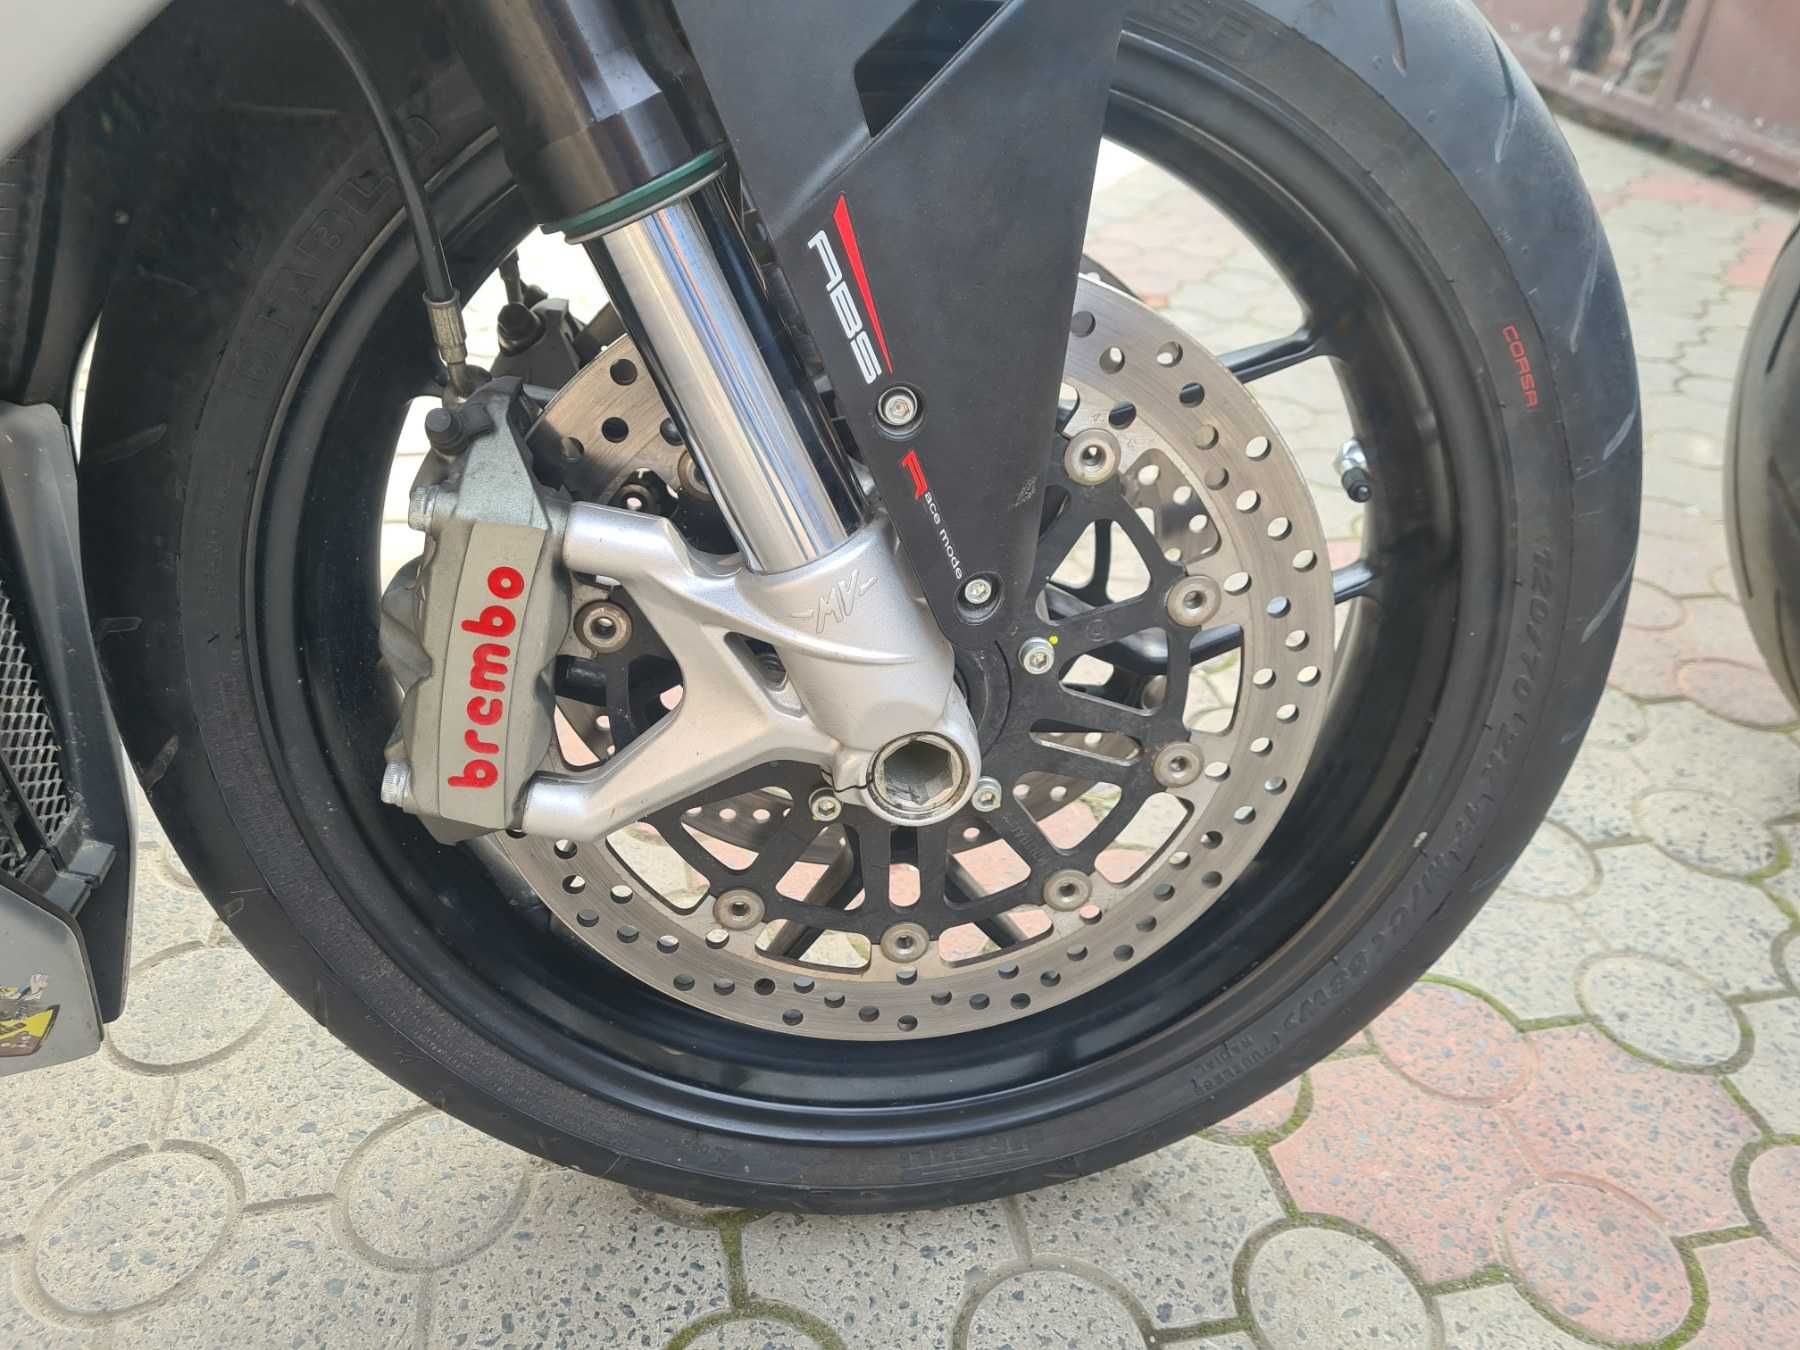 Ducati hypermotard 1100